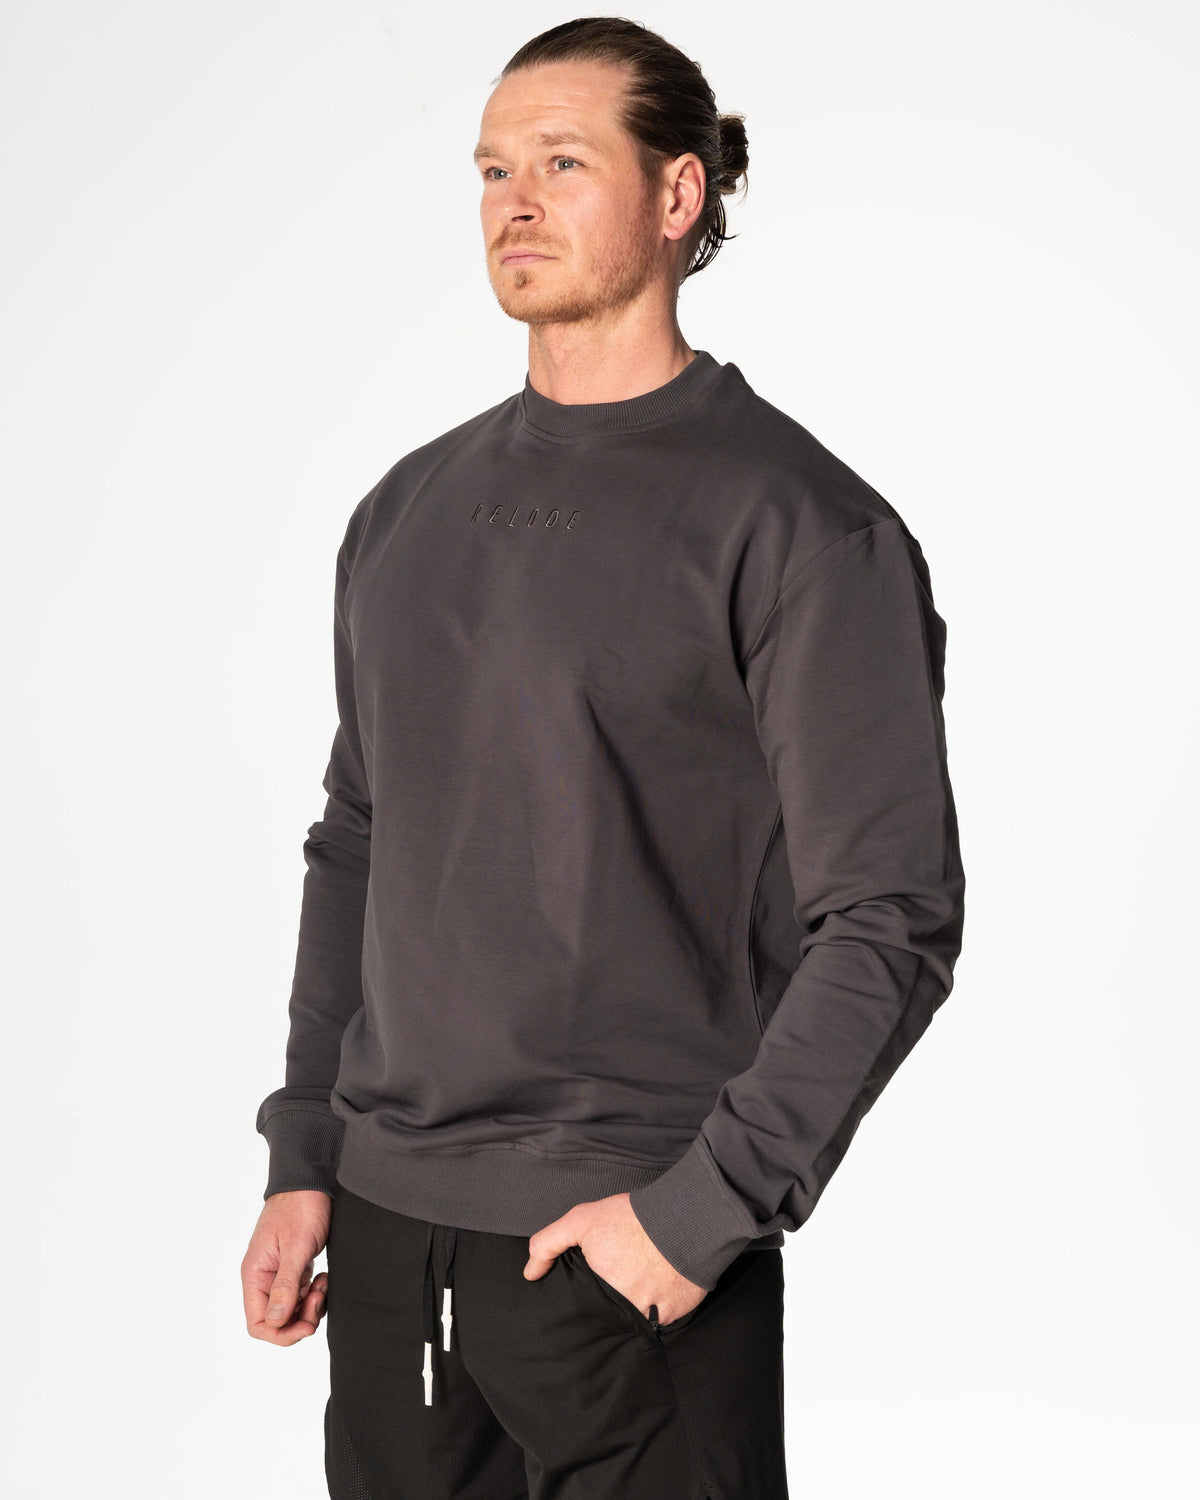 Maverick Men's Sweatshirt - Gray